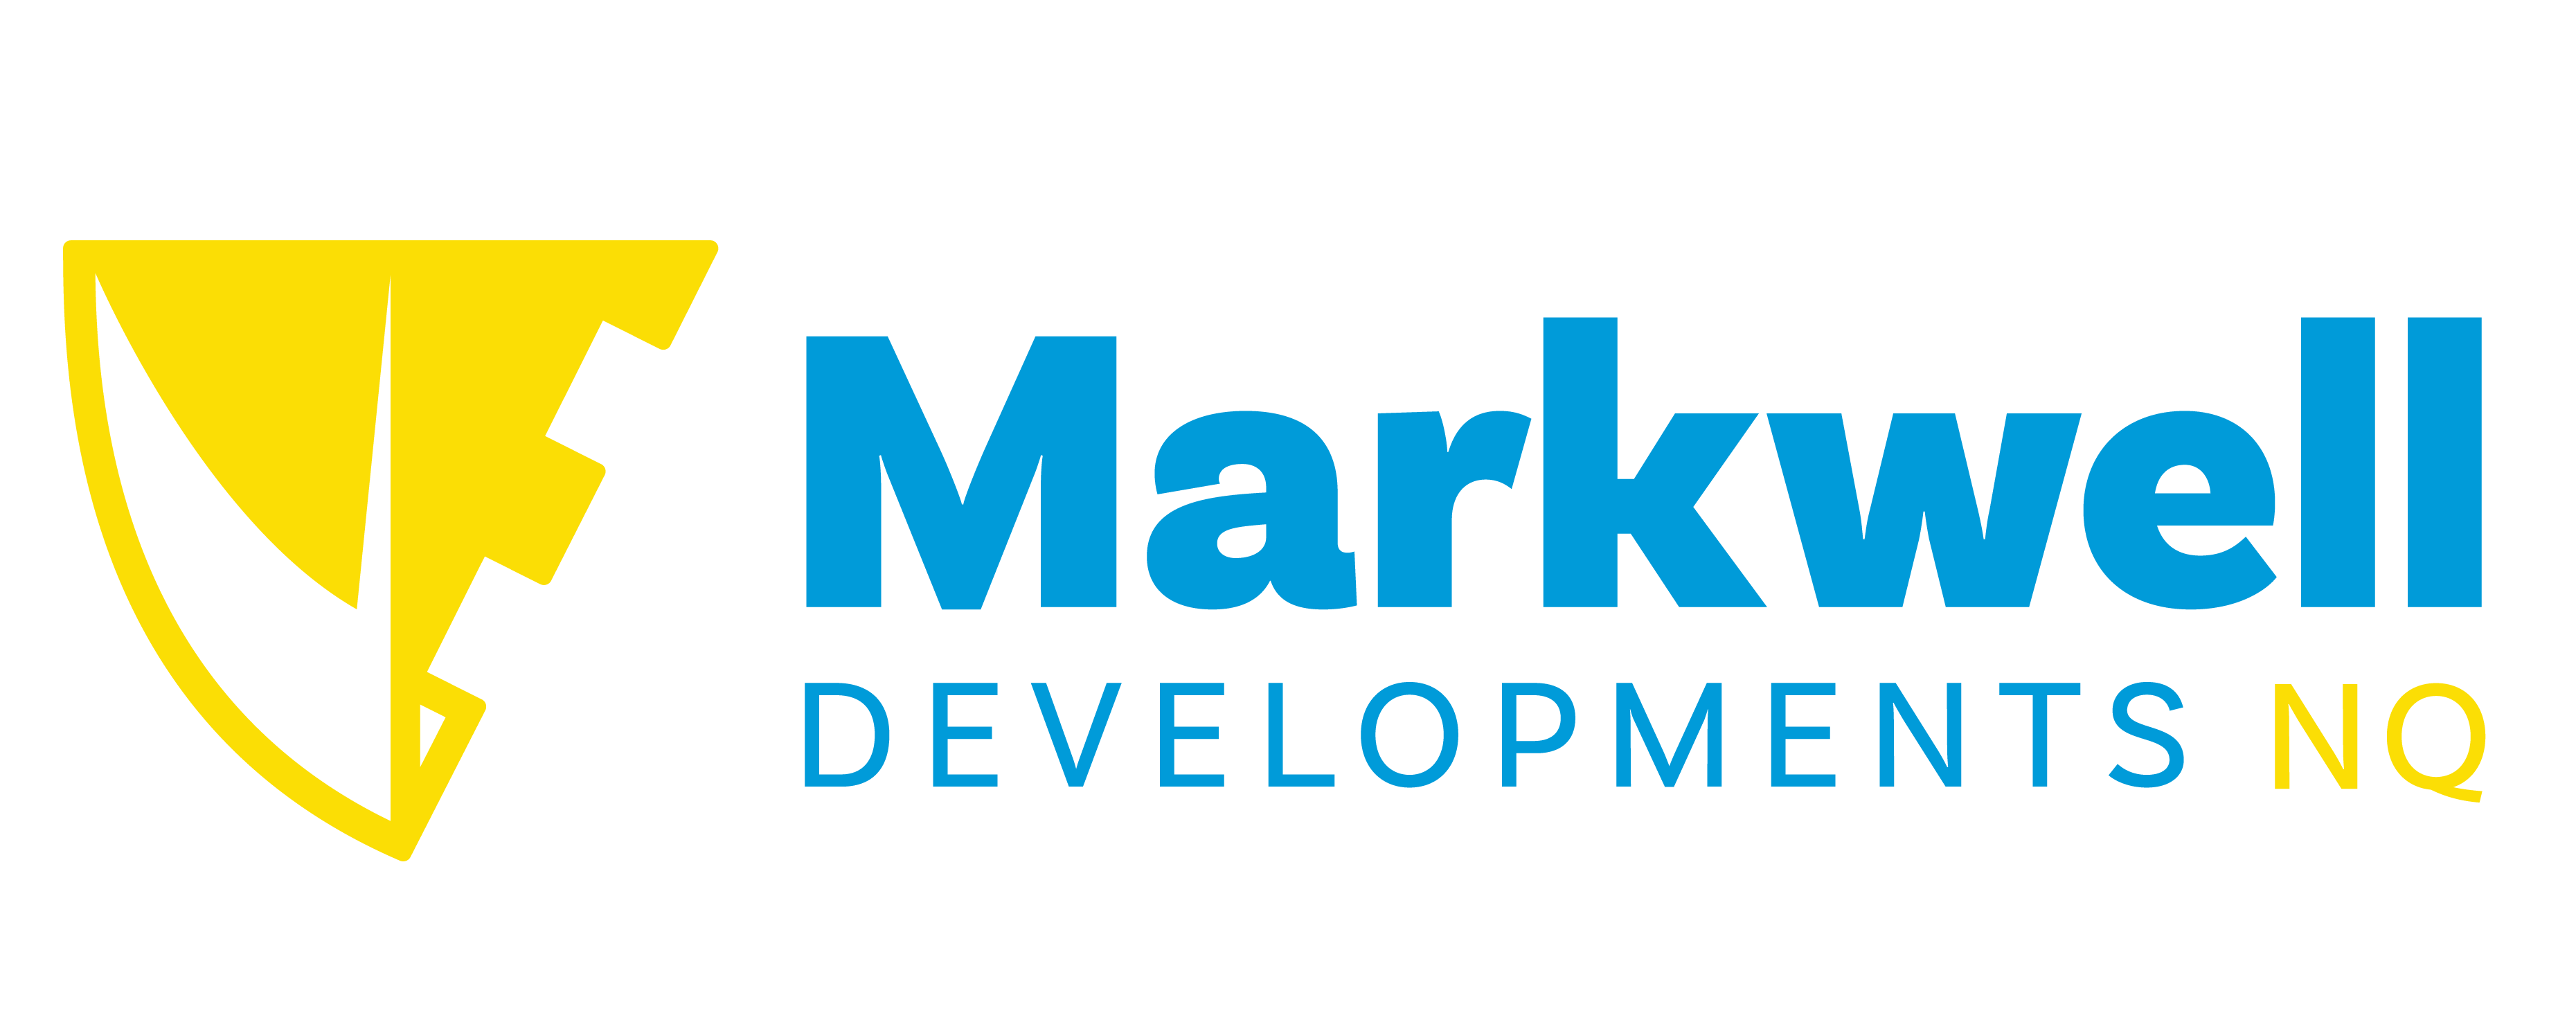 Markwell_-Developments_cmyk-01